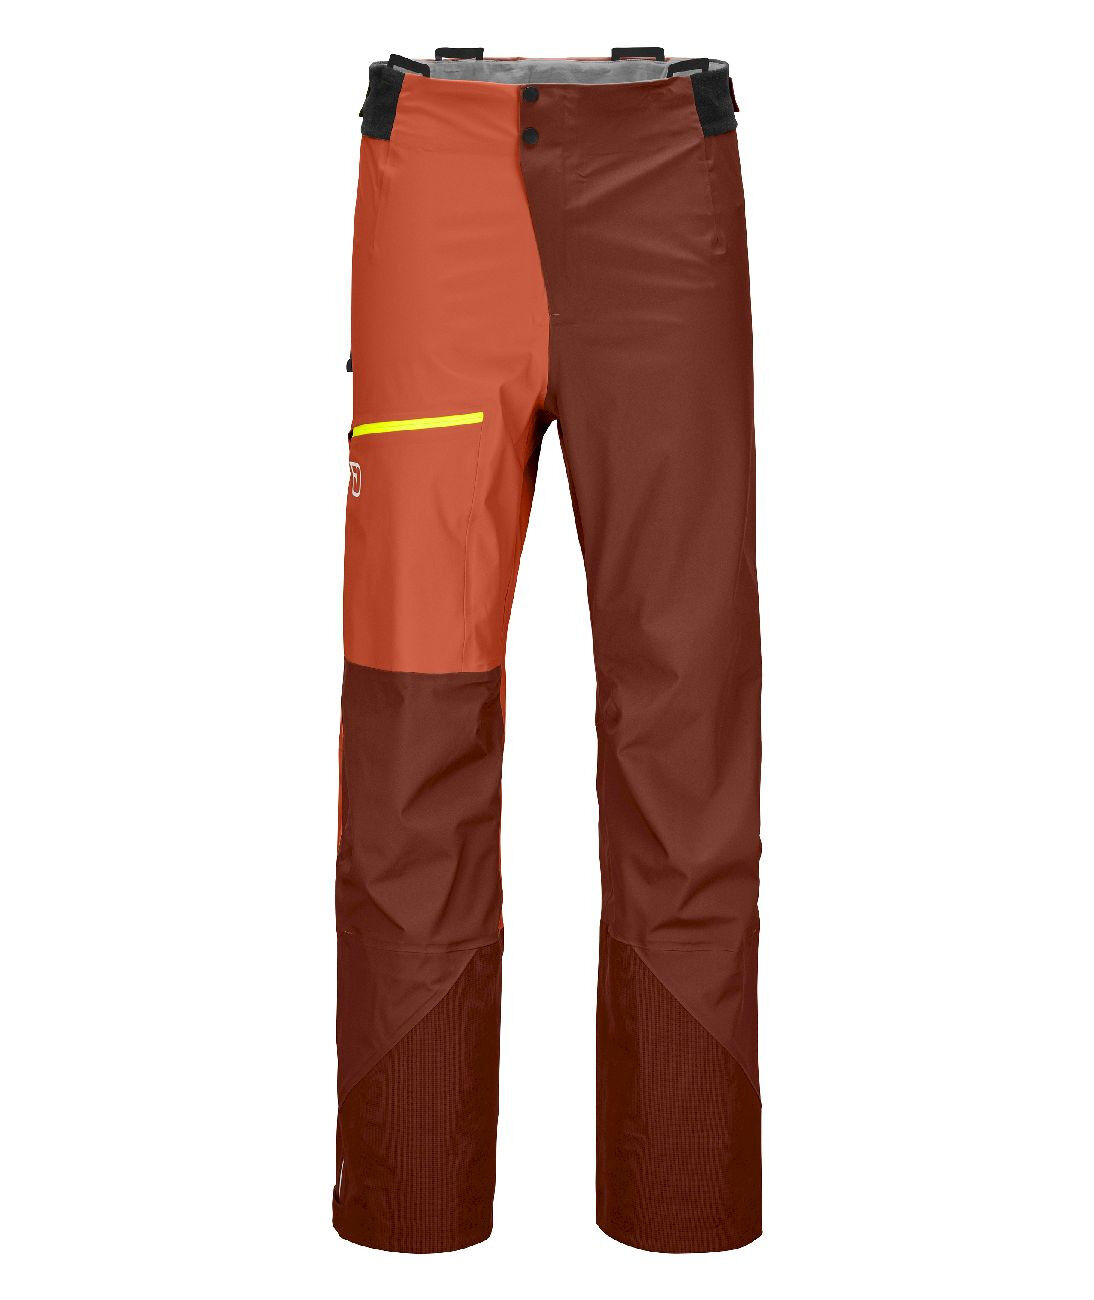 Ortovox 3L Ortler Pants - Waterproof trousers - Men's